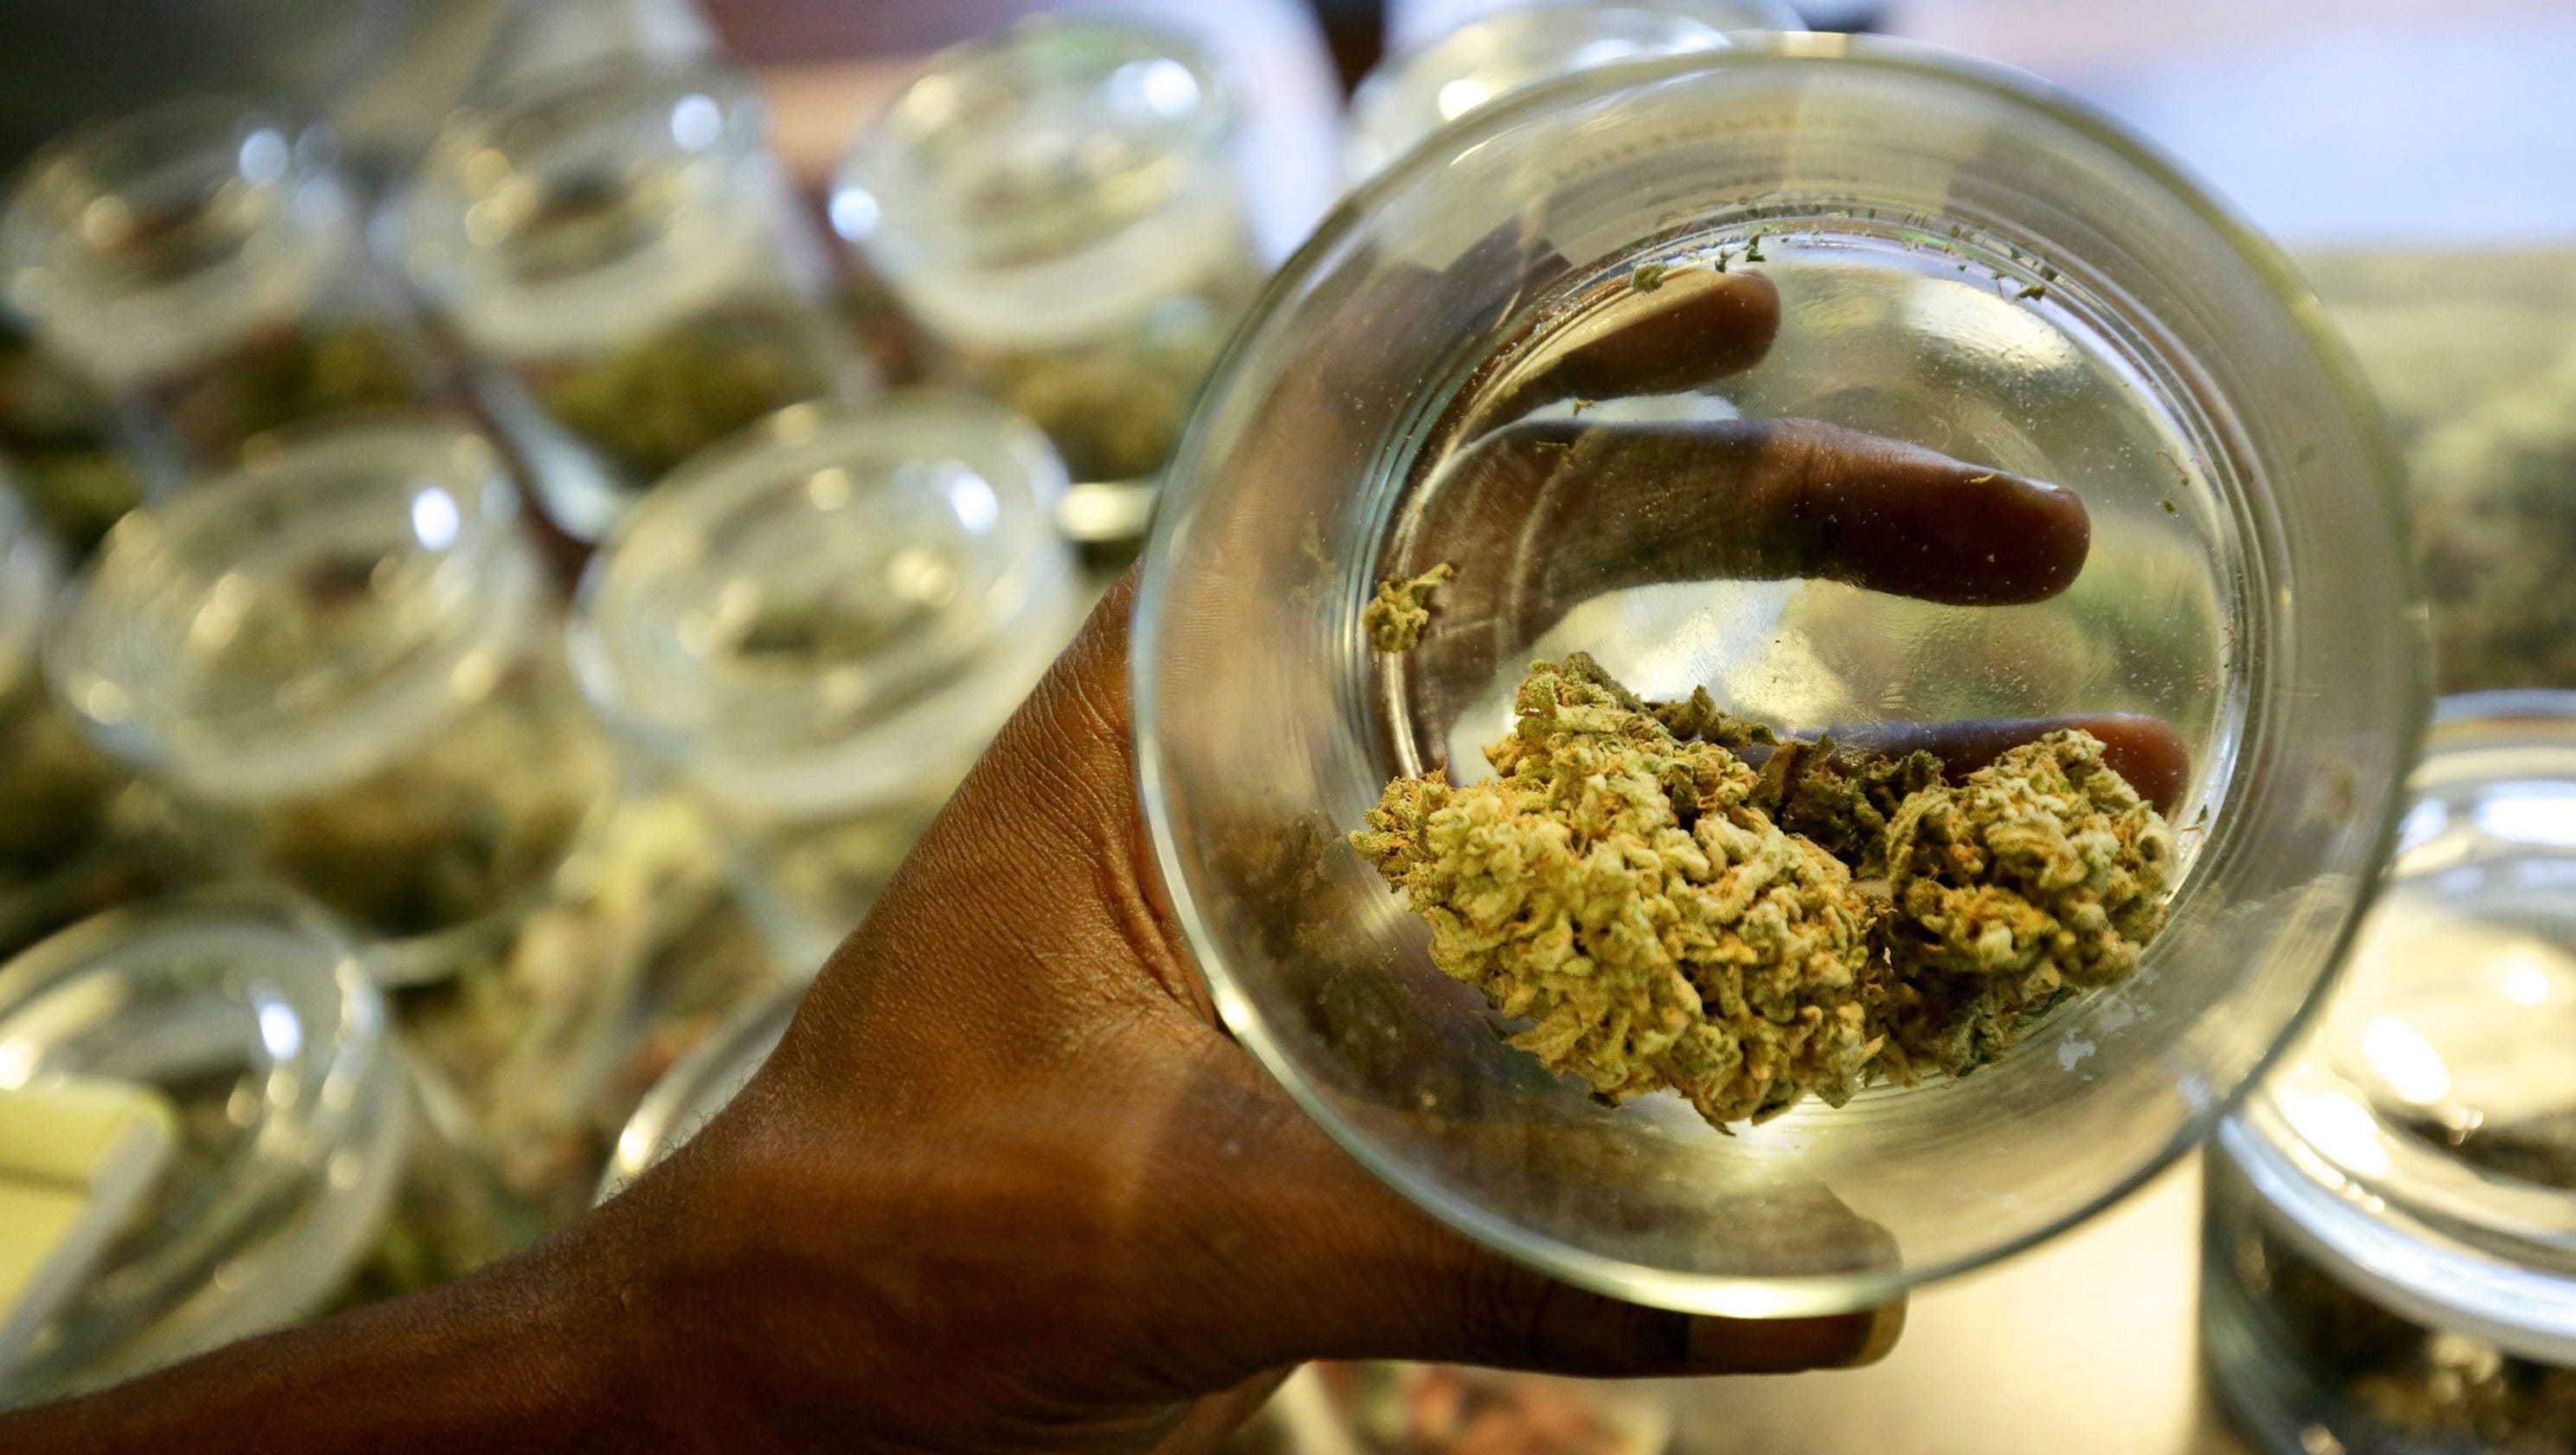 Ohio judge delays ruling on medical marijuana grower's complaint